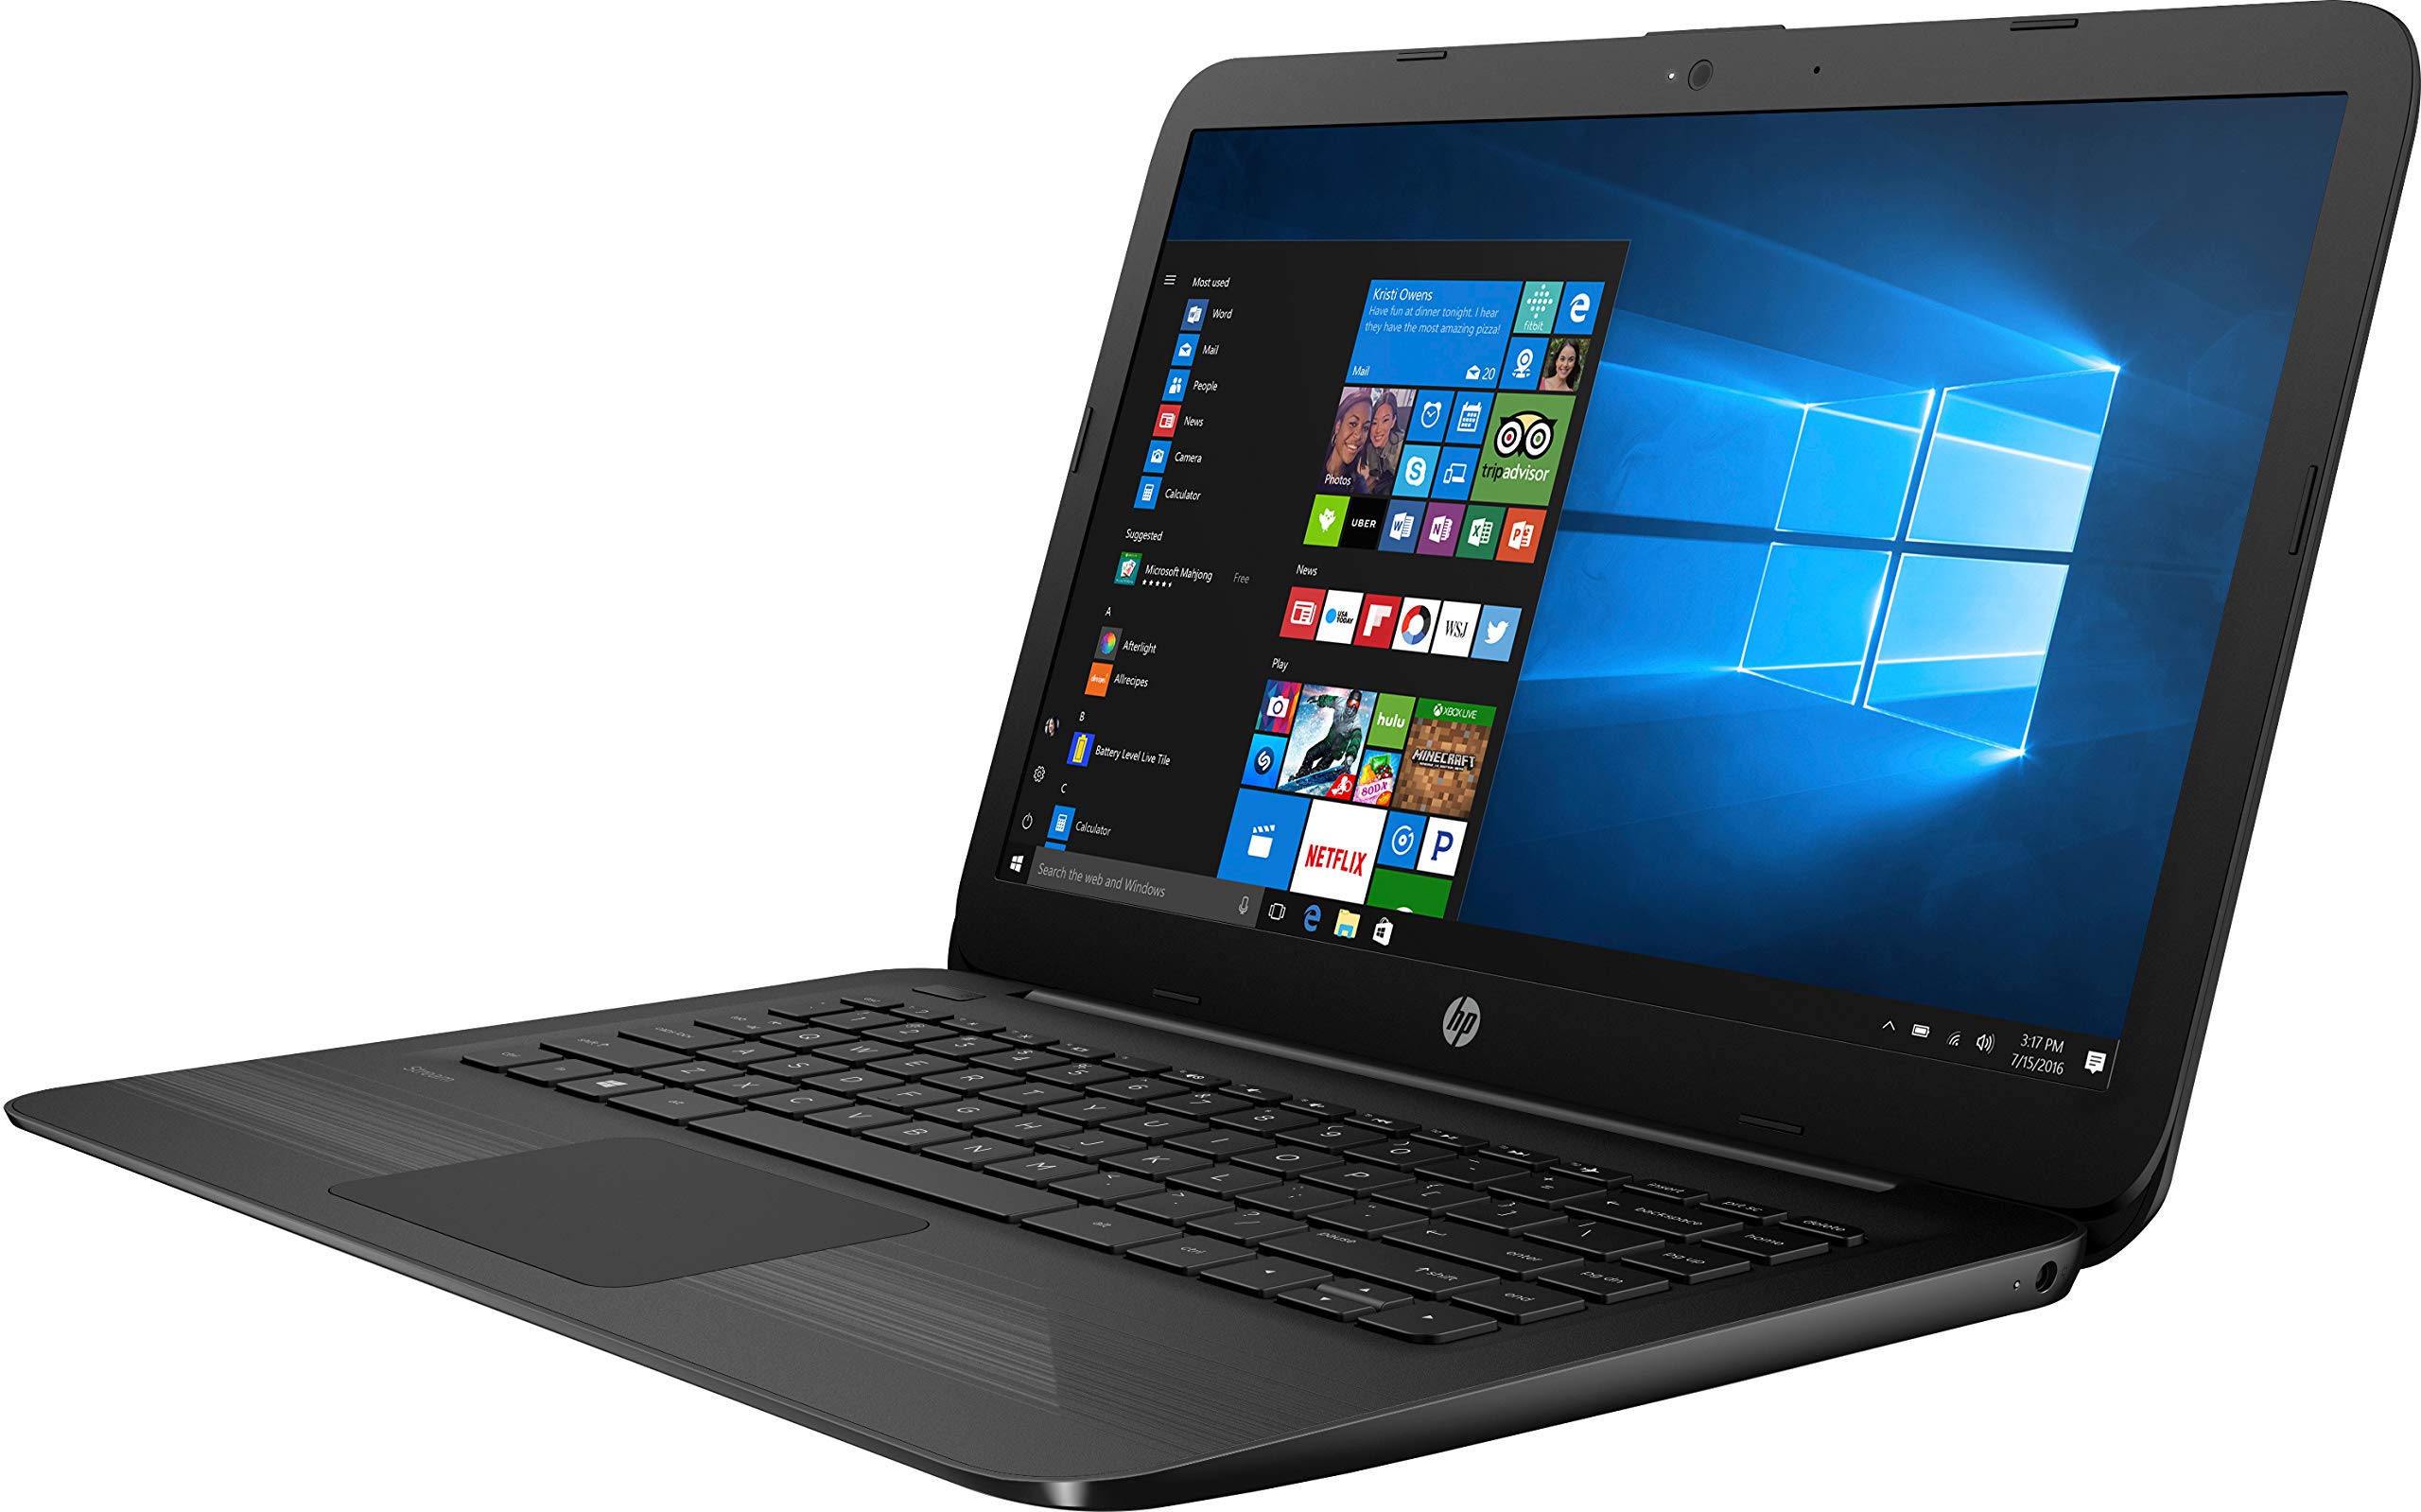 HP 14-ax040wm Laptop, Intel Celeron N3060, 1.6 GHz, 32 GB, Windows 10 Home 64 Bit, Black, 14